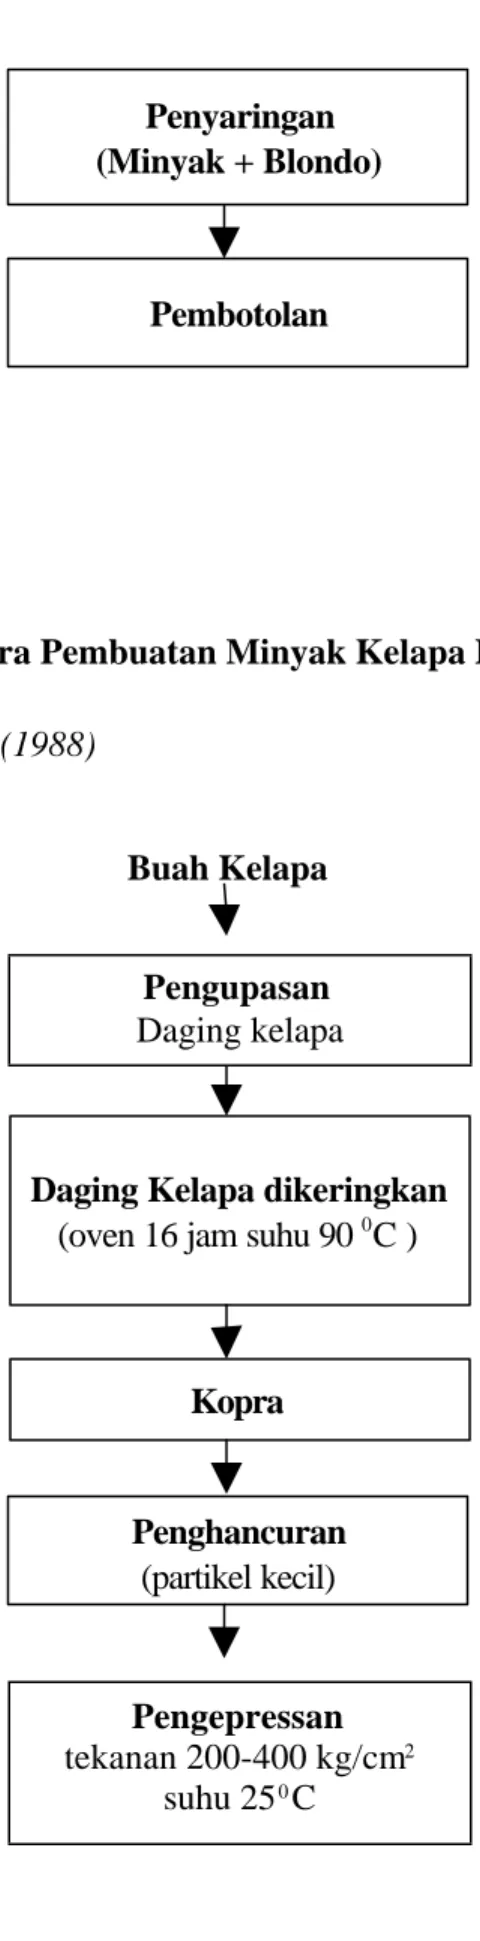 Gambar 1. Diagram Cara Pembuatan Minyak Kelapa Murni Dengan Proses        Basah Sumber :    Suhardiyono, (1988) Buah KelapaPembotolan Penyaringan (Minyak + Blondo)